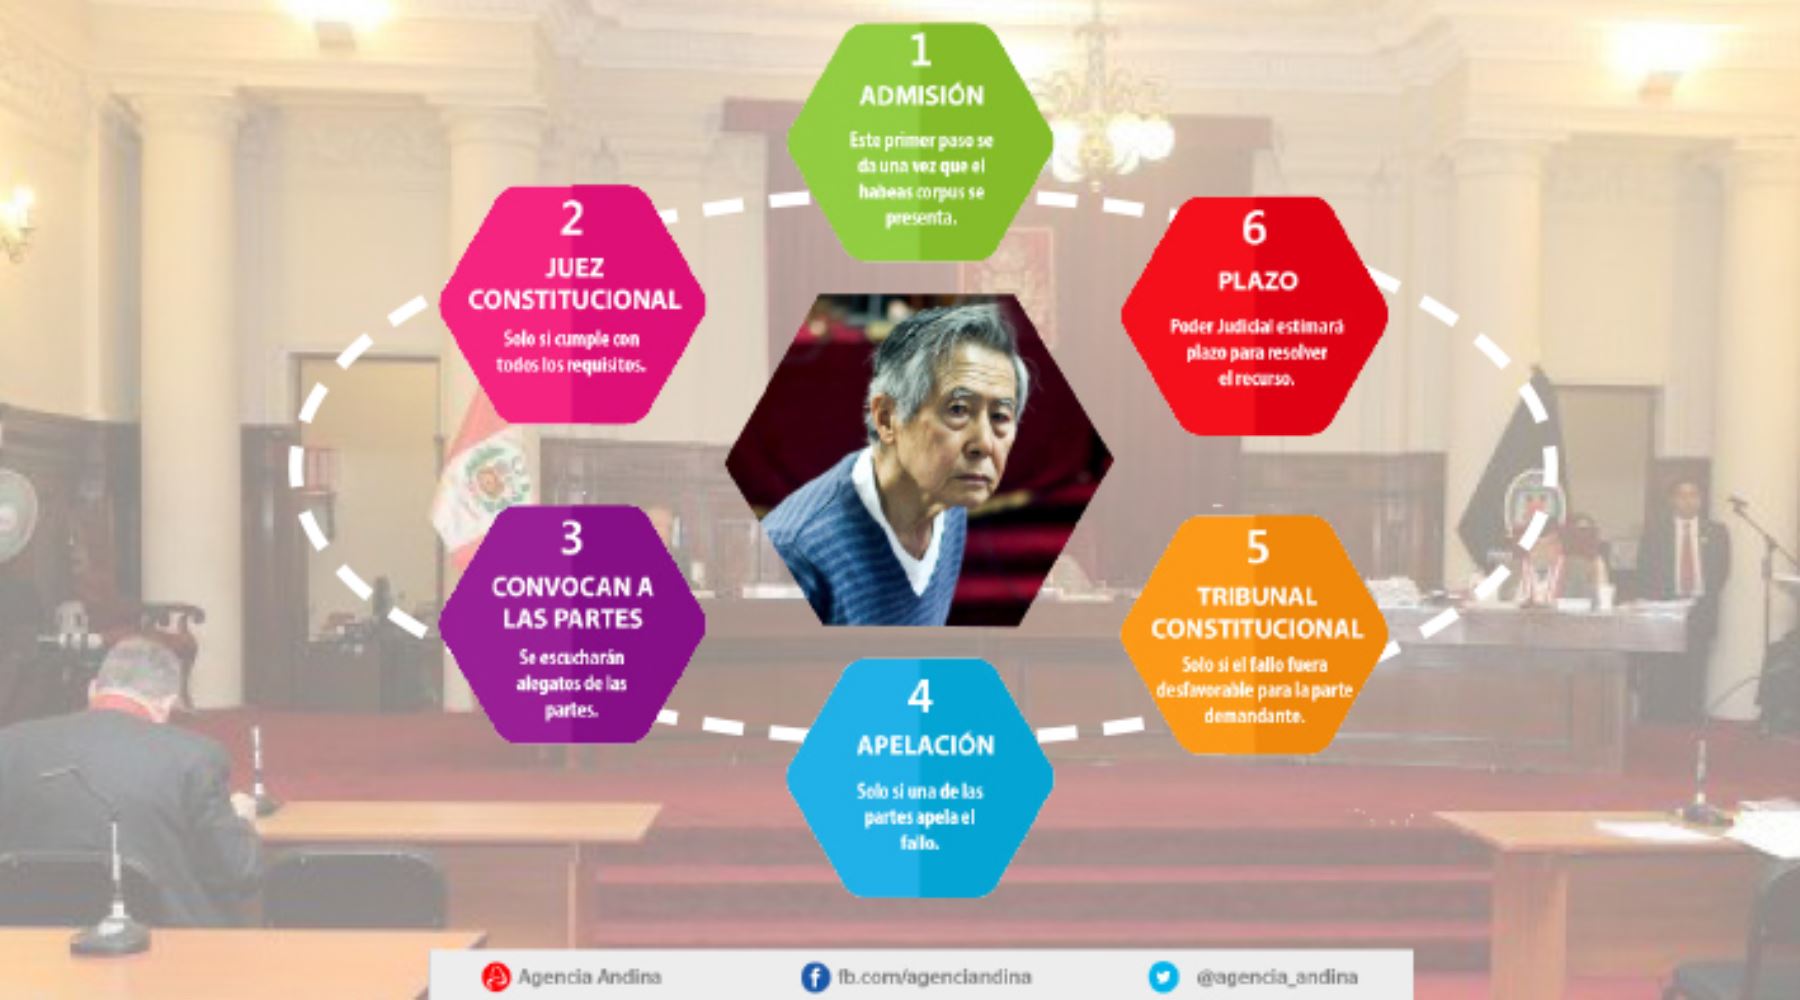 La ruta del "habeas corpus" que busca la libertad de Alberto Fujimori [interactivo].